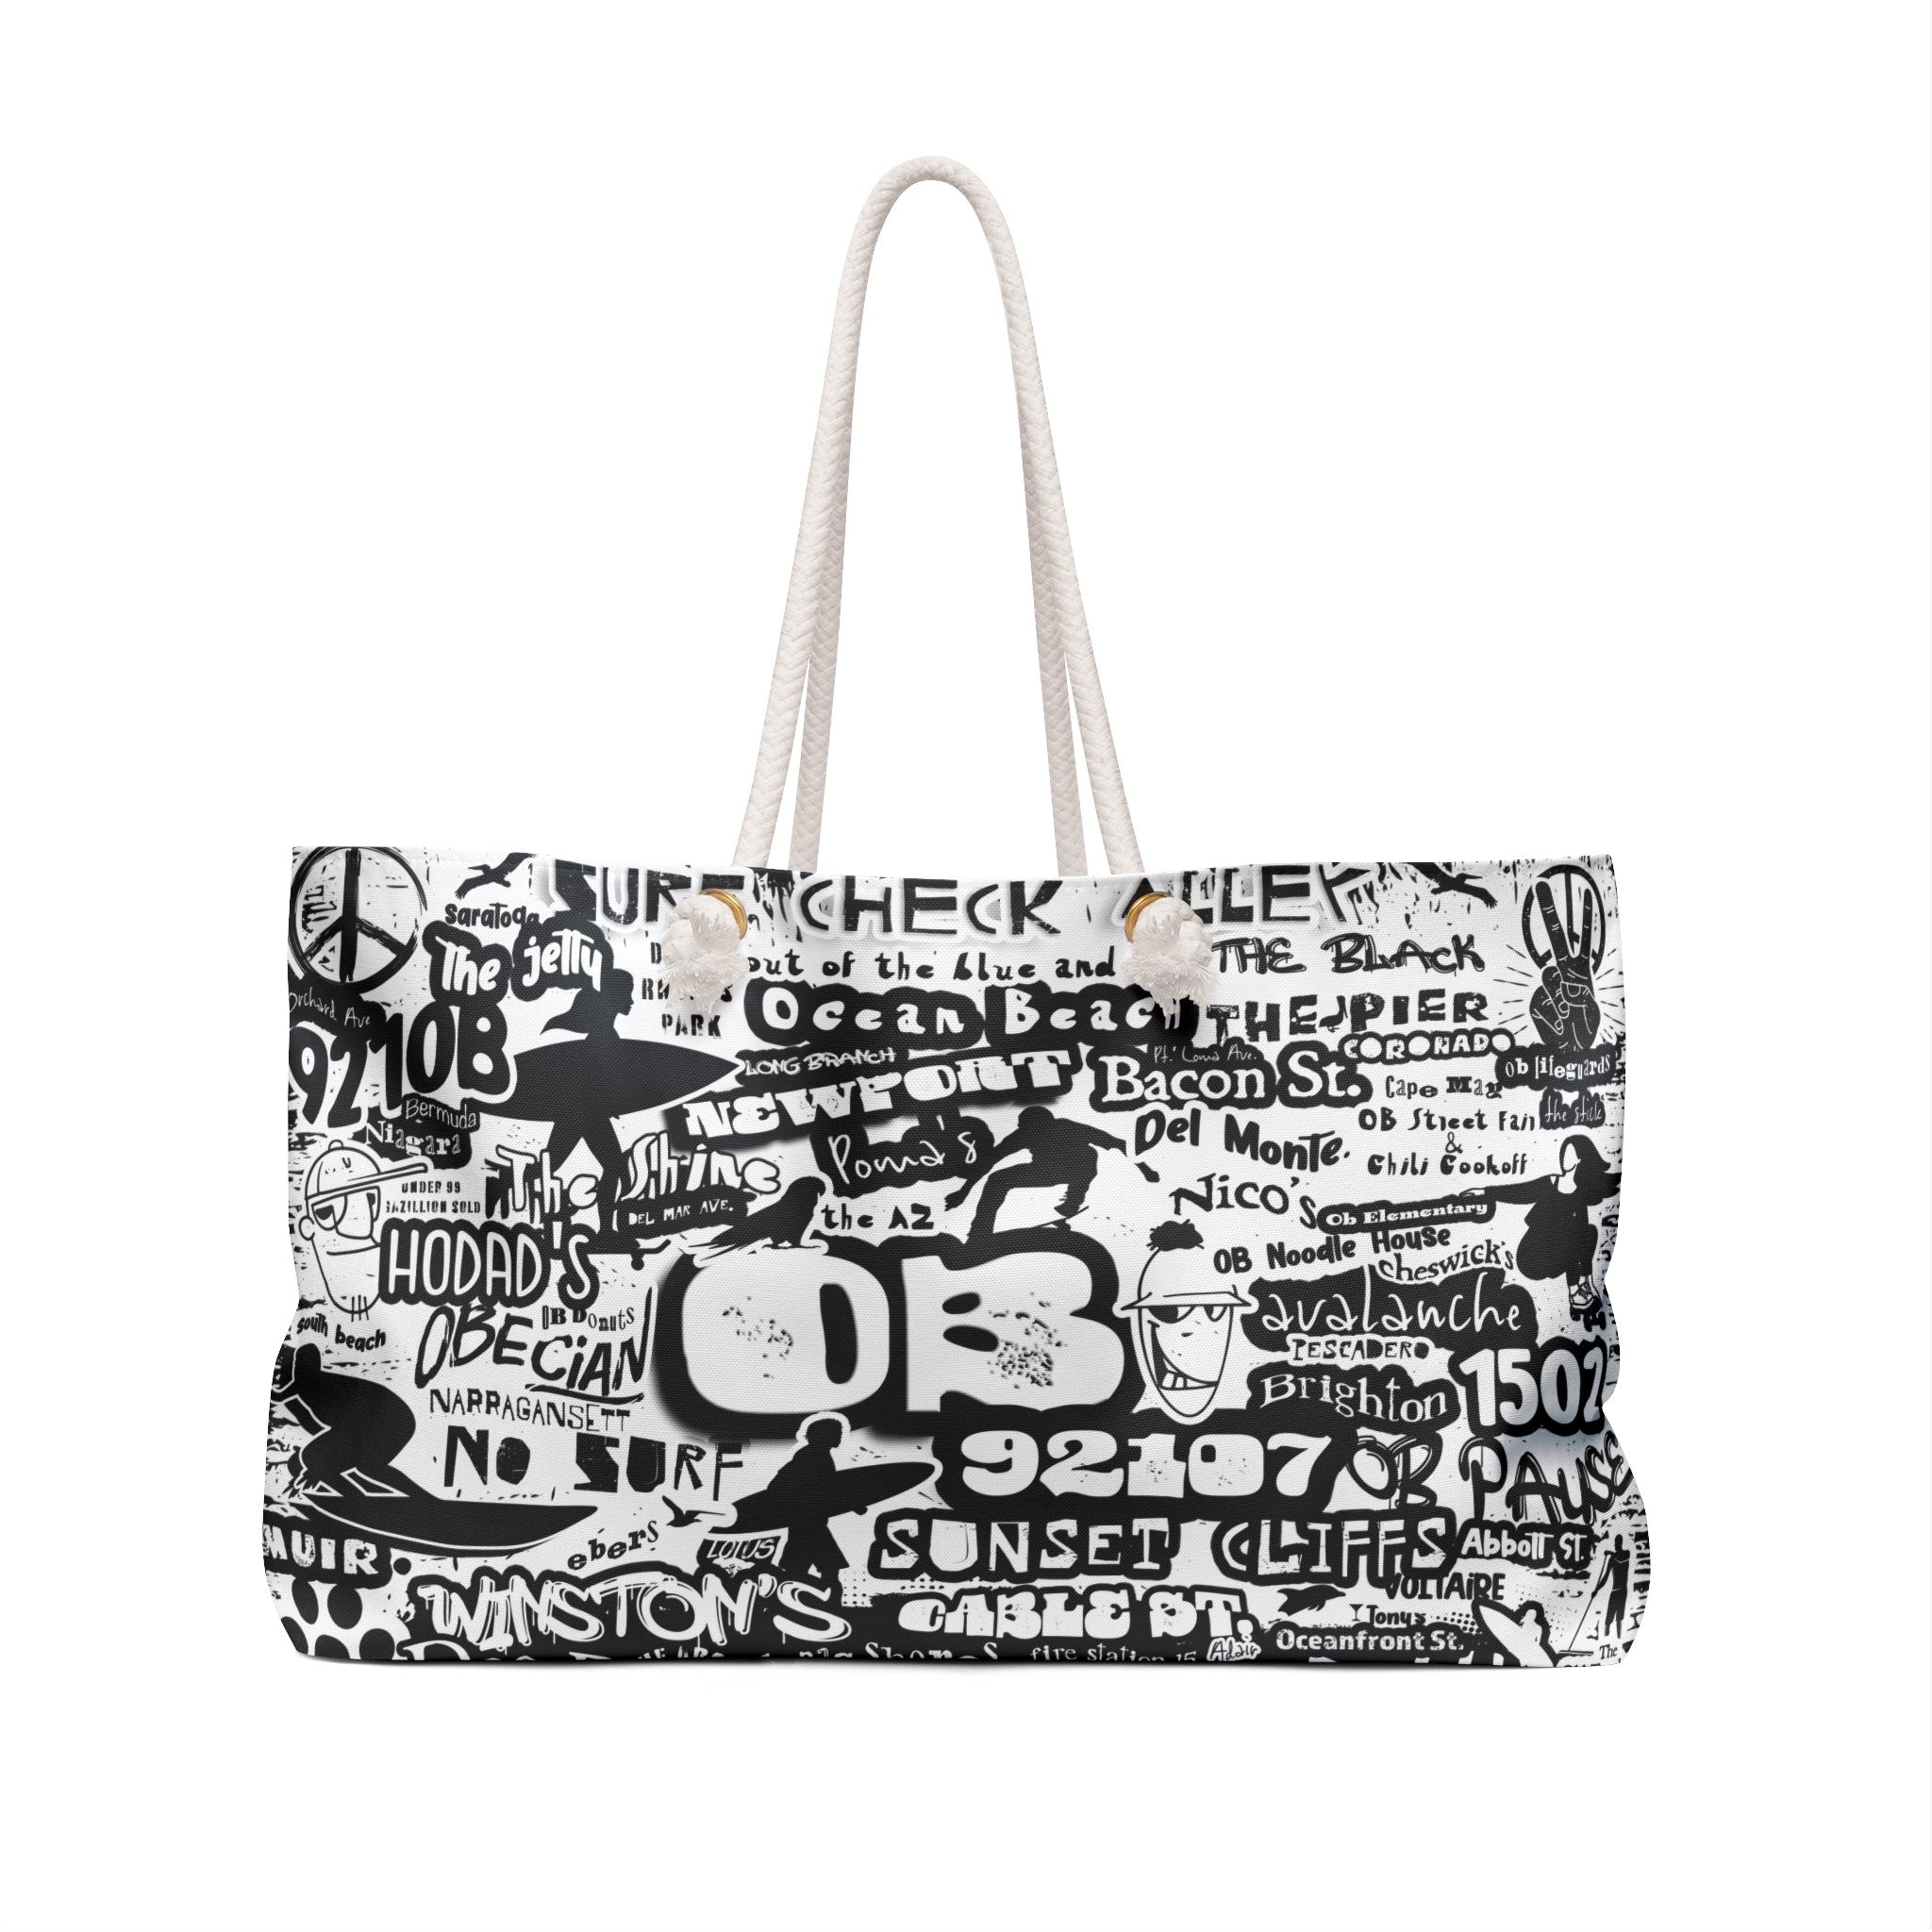 Graffiti bags 2021 trendy designer handbags| Alibaba.com